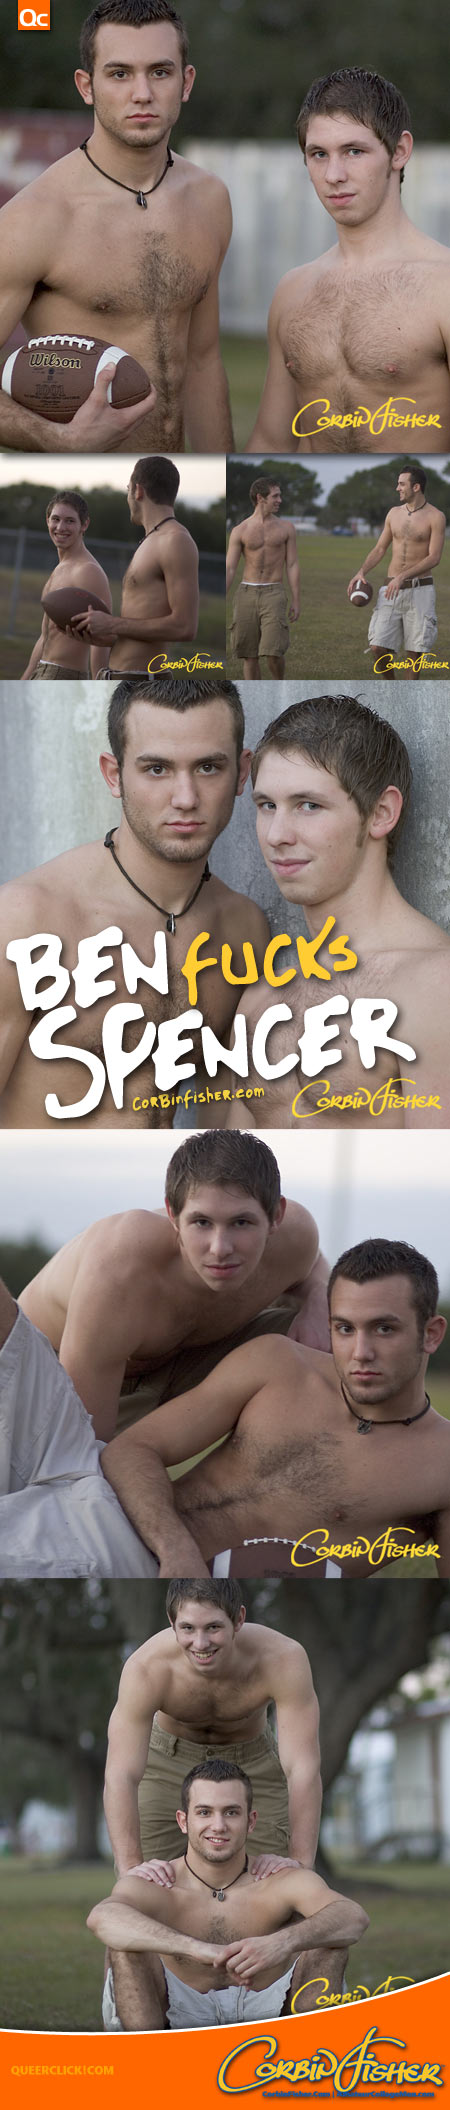 Ben Fucks Spencer at CorbinFisher.com